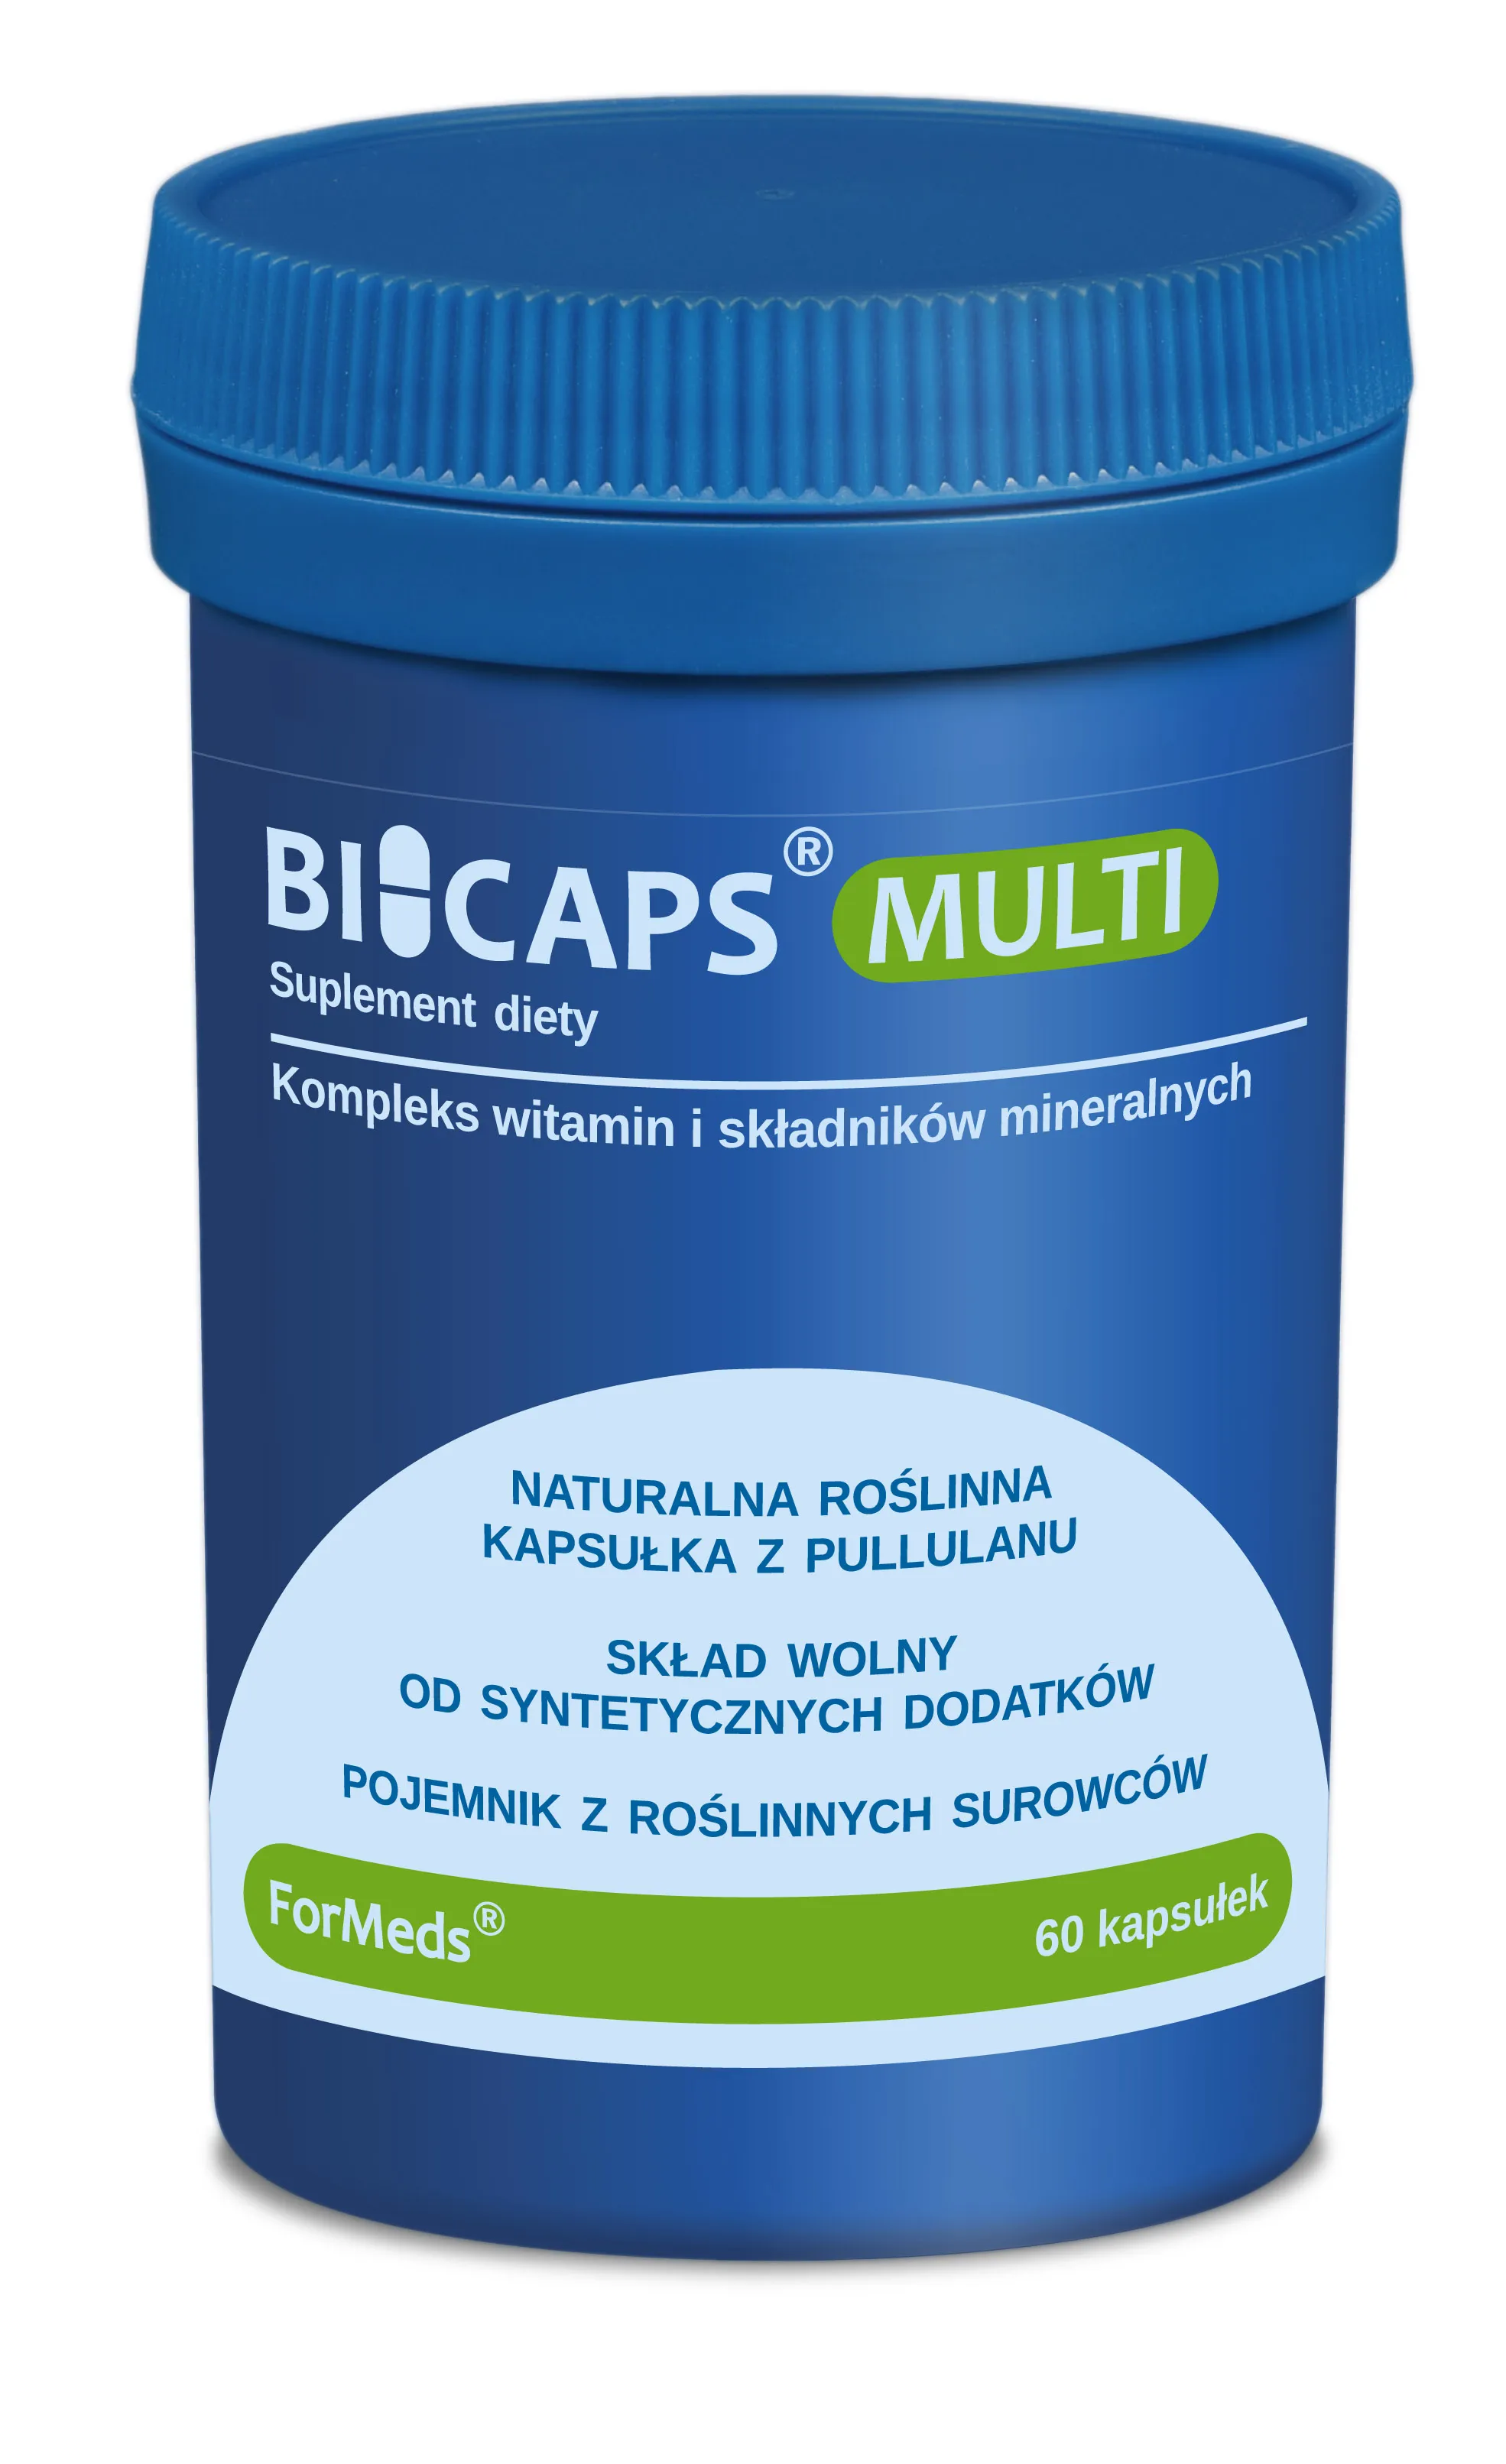 ForMeds Bicaps Multi, suplement diety, 60 kapsułek